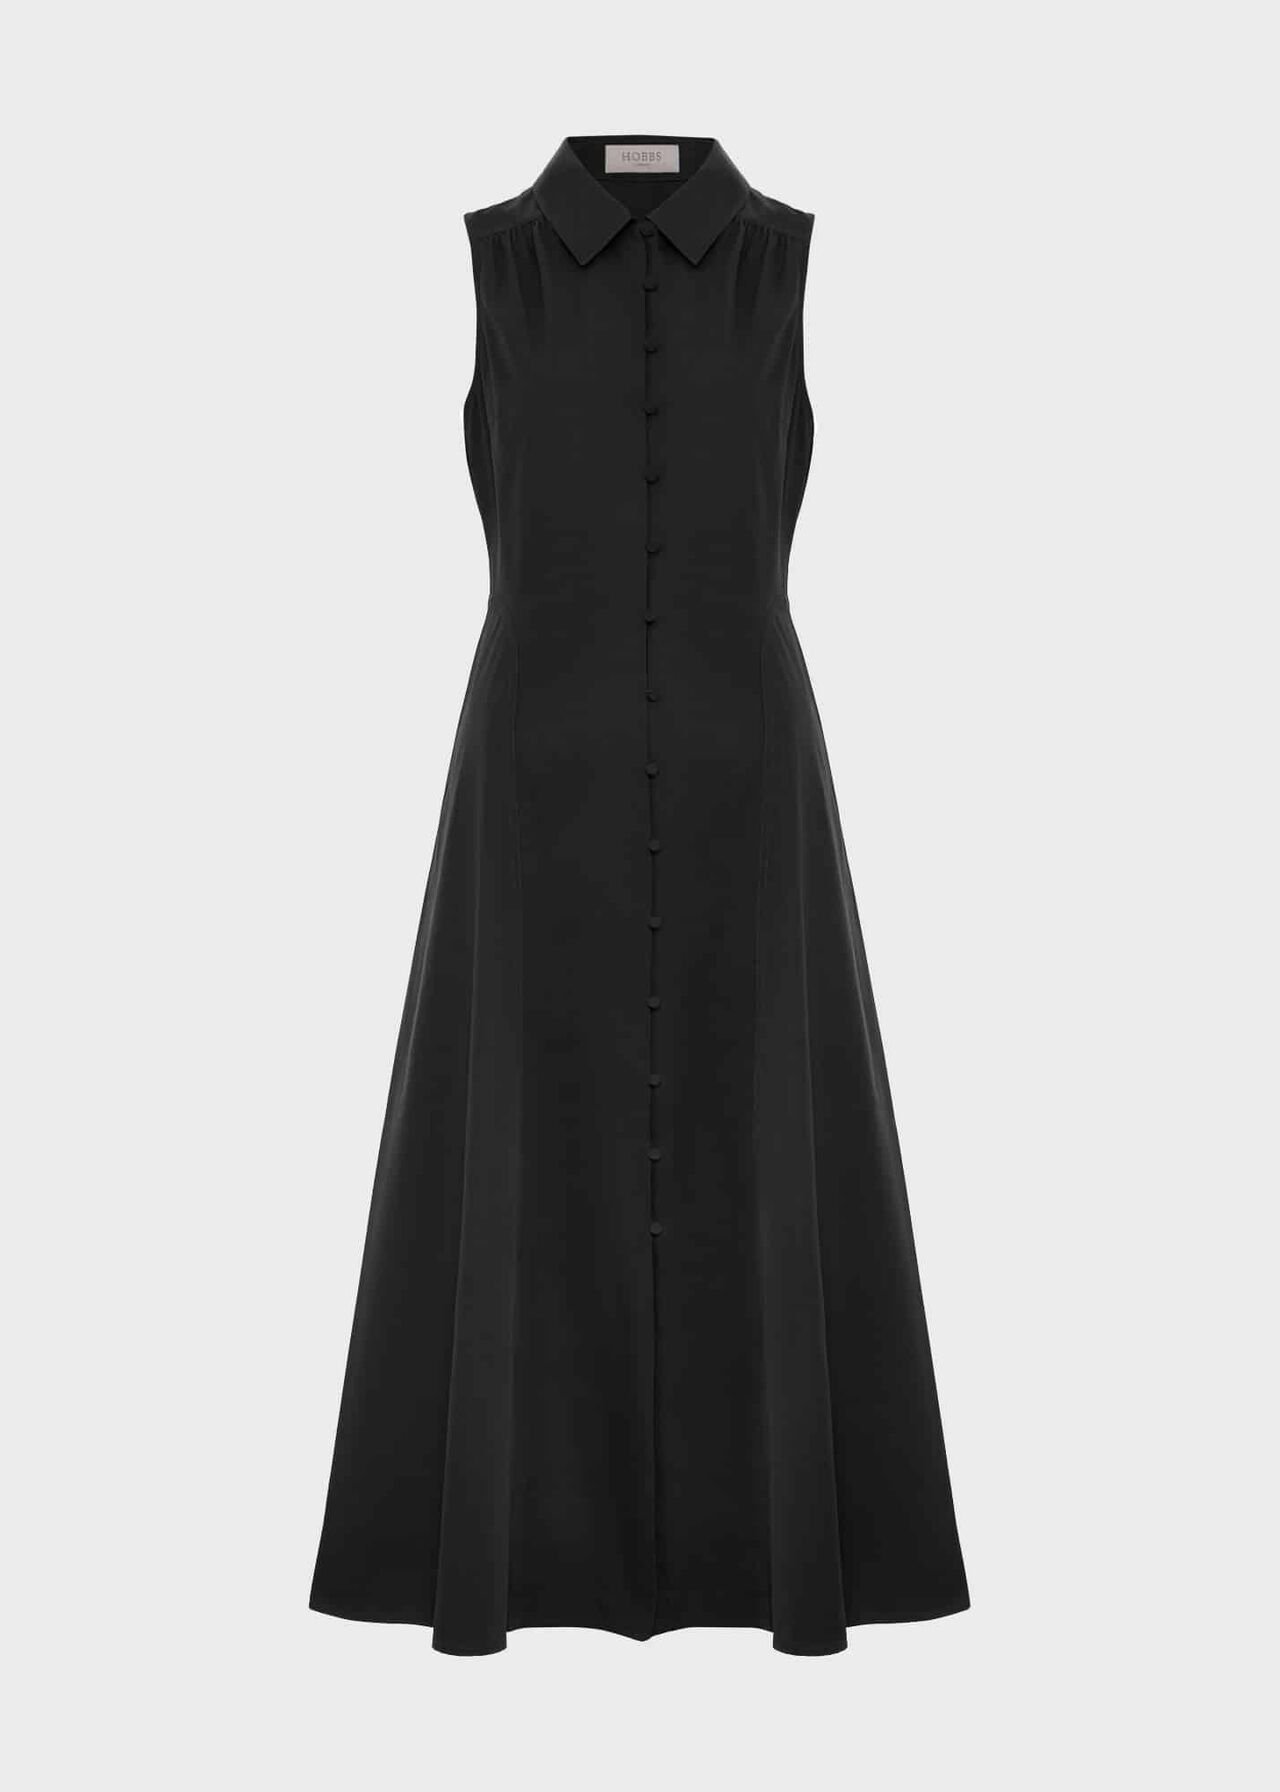 Cathleen Dress, Black, hi-res